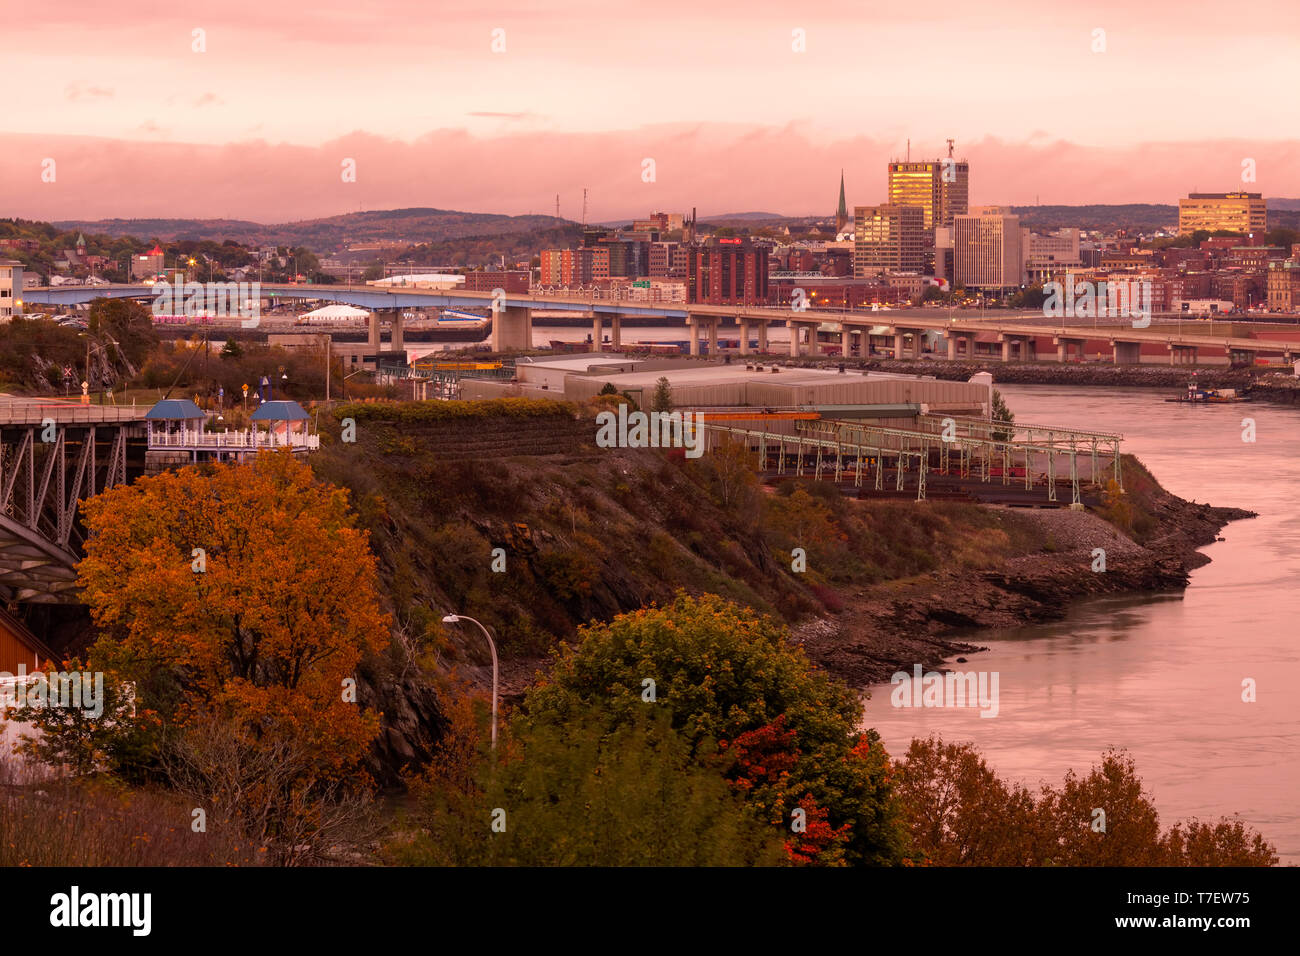 The Saint John skyline and the Saint John River at sunset in Saint John, New Brunswick, Canada. Stock Photo